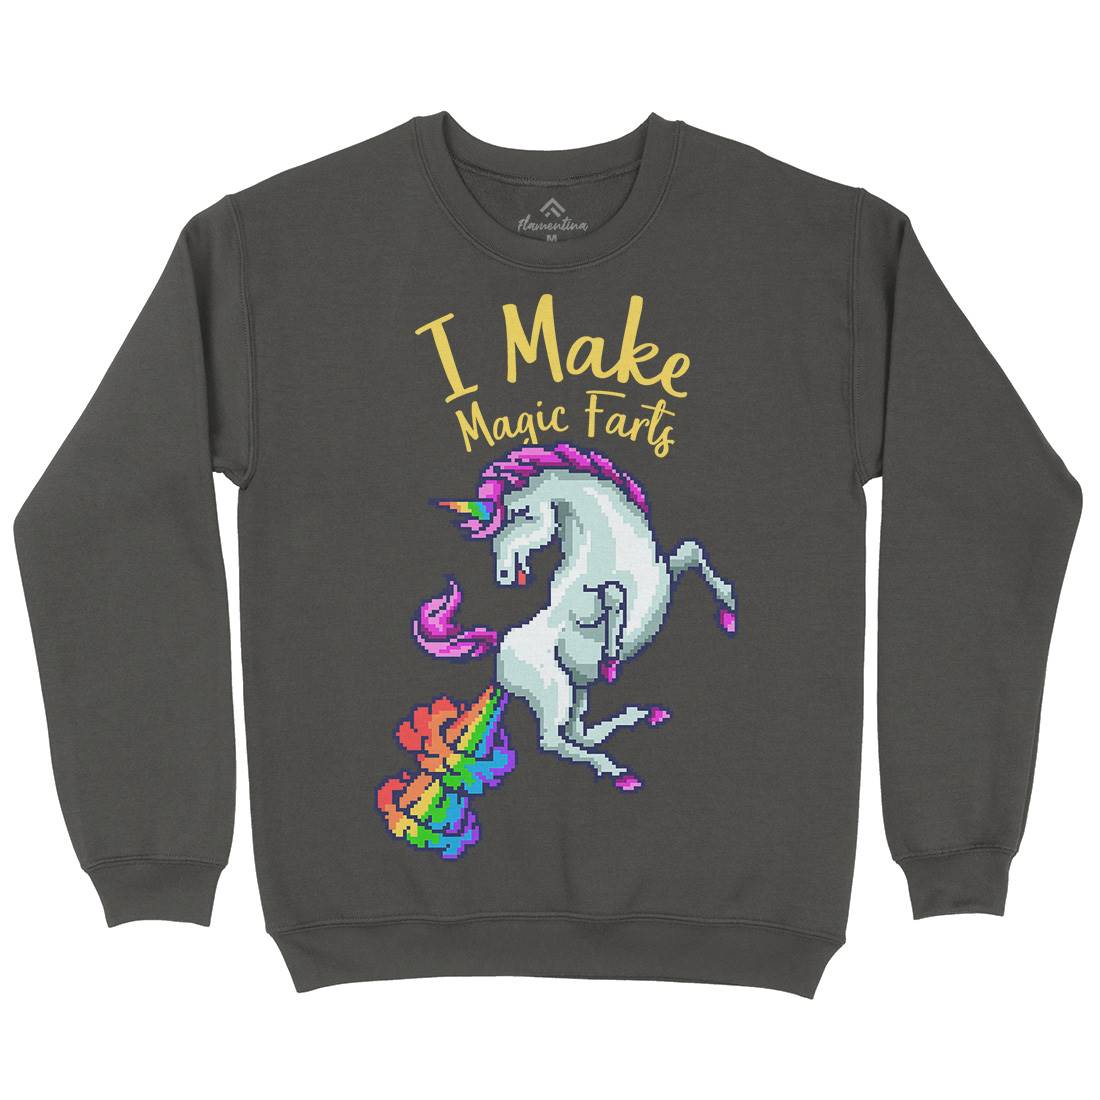 I Make Magic Farts Kids Crew Neck Sweatshirt Retro B915